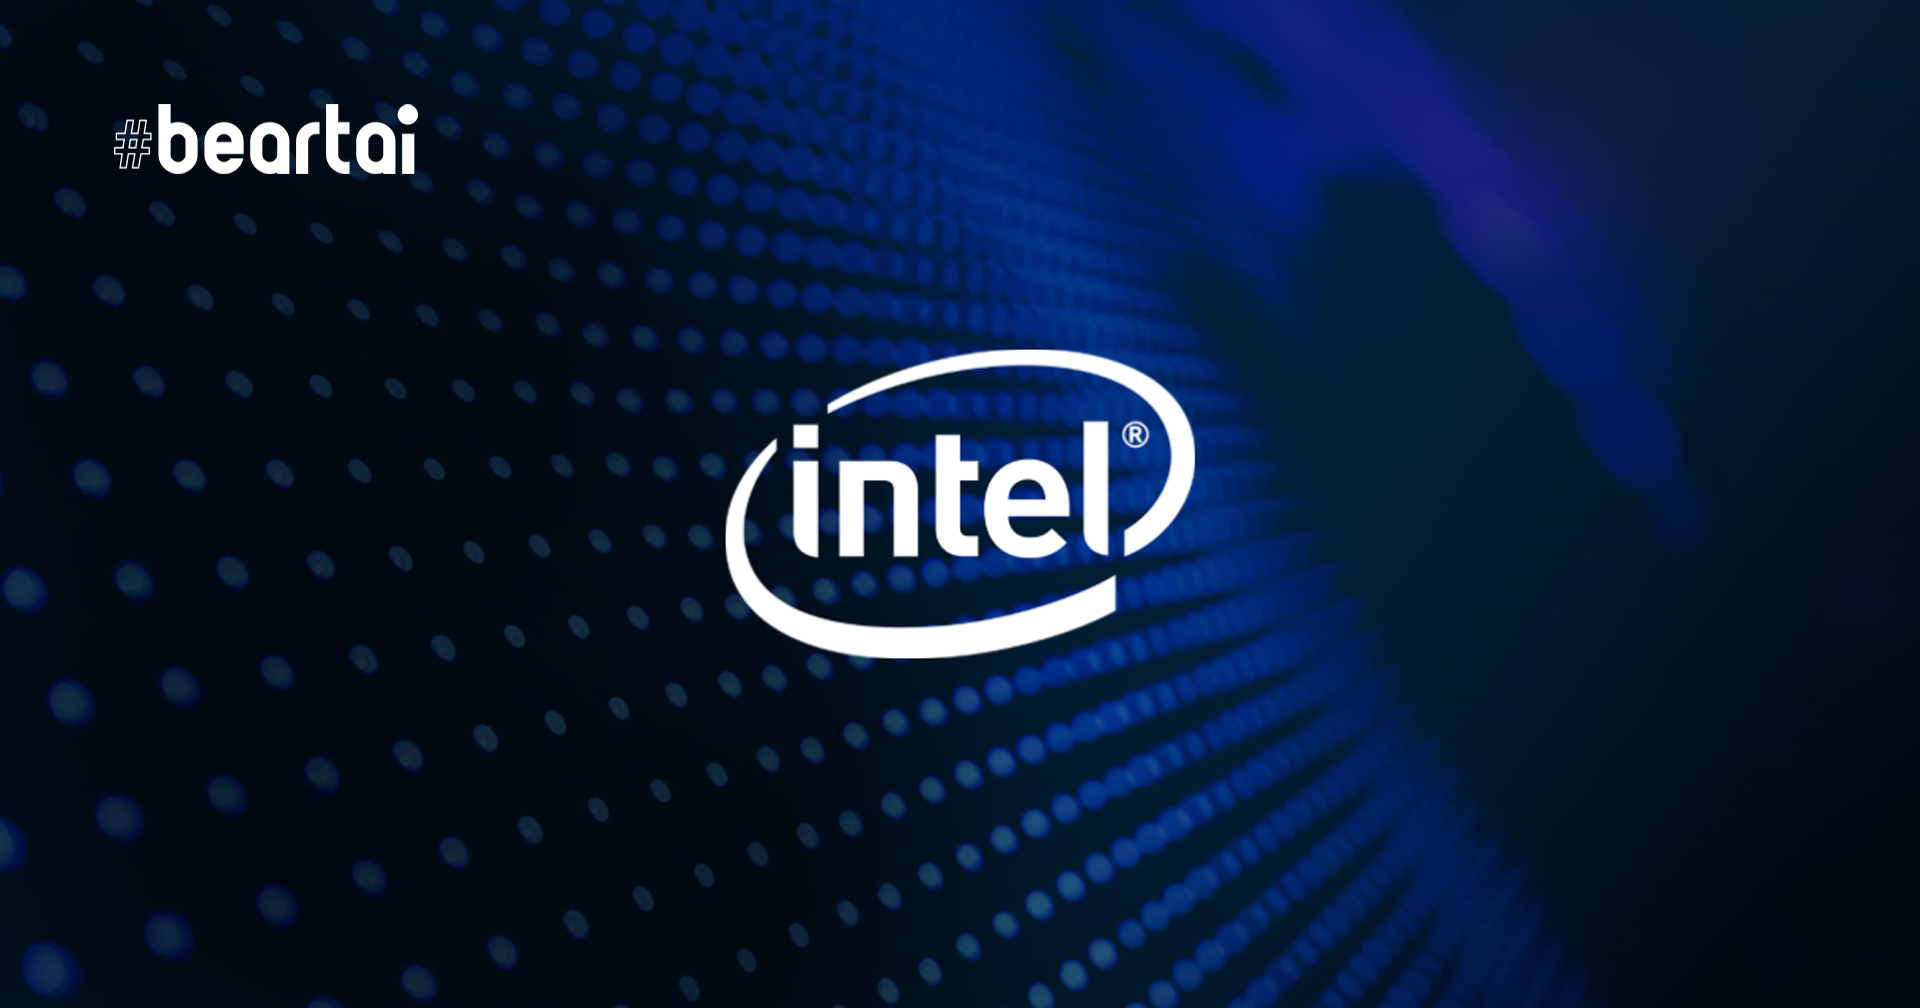 Intel กำลังลงทุนใน Jio Platforms ของอินเดีย 253 ล้านเหรียญสหรัฐฯ ตามติด Facebook